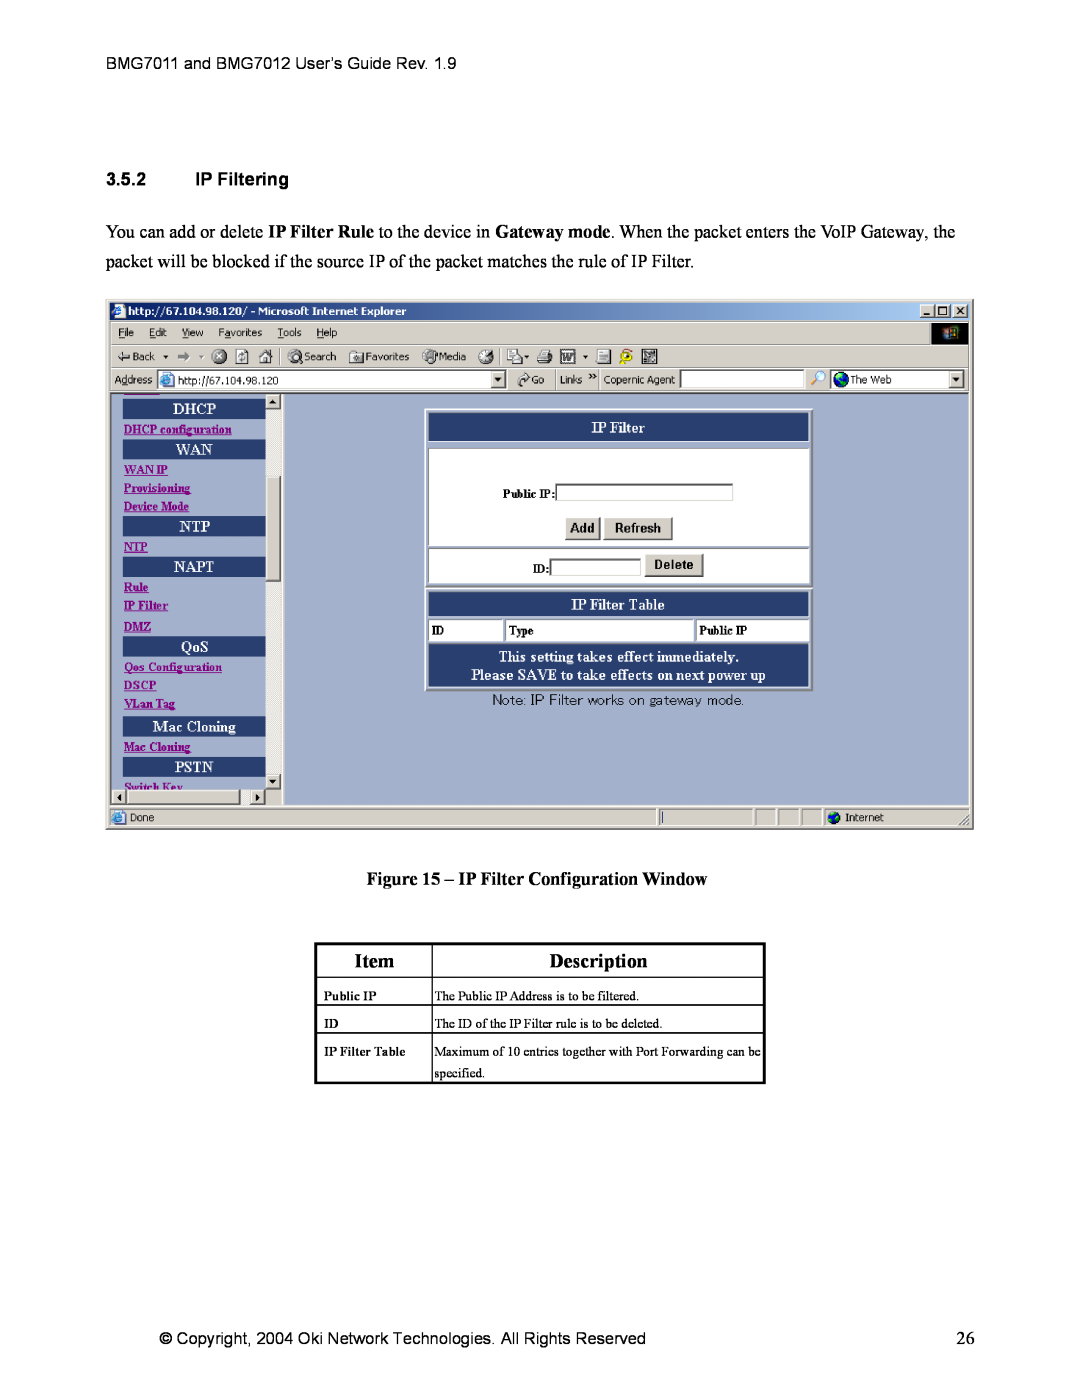 Oki BMG7012, BMG7011 manual 3.5.2IP Filtering, IP Filter Configuration Window, Description 